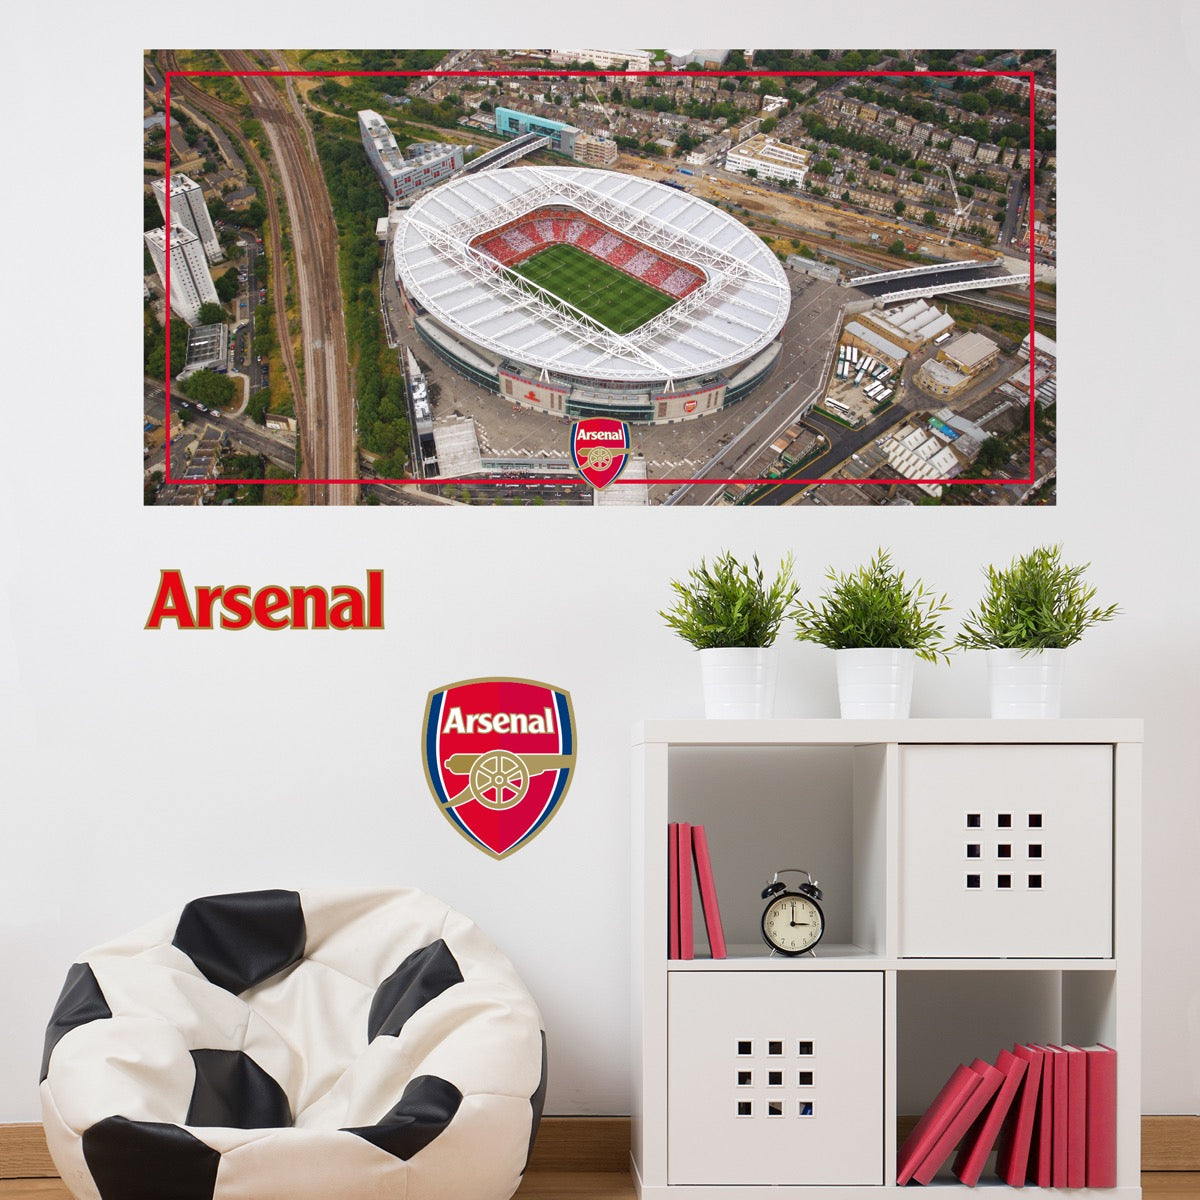 Arsenal Emirates Stadium Aerial View Wall Sticker